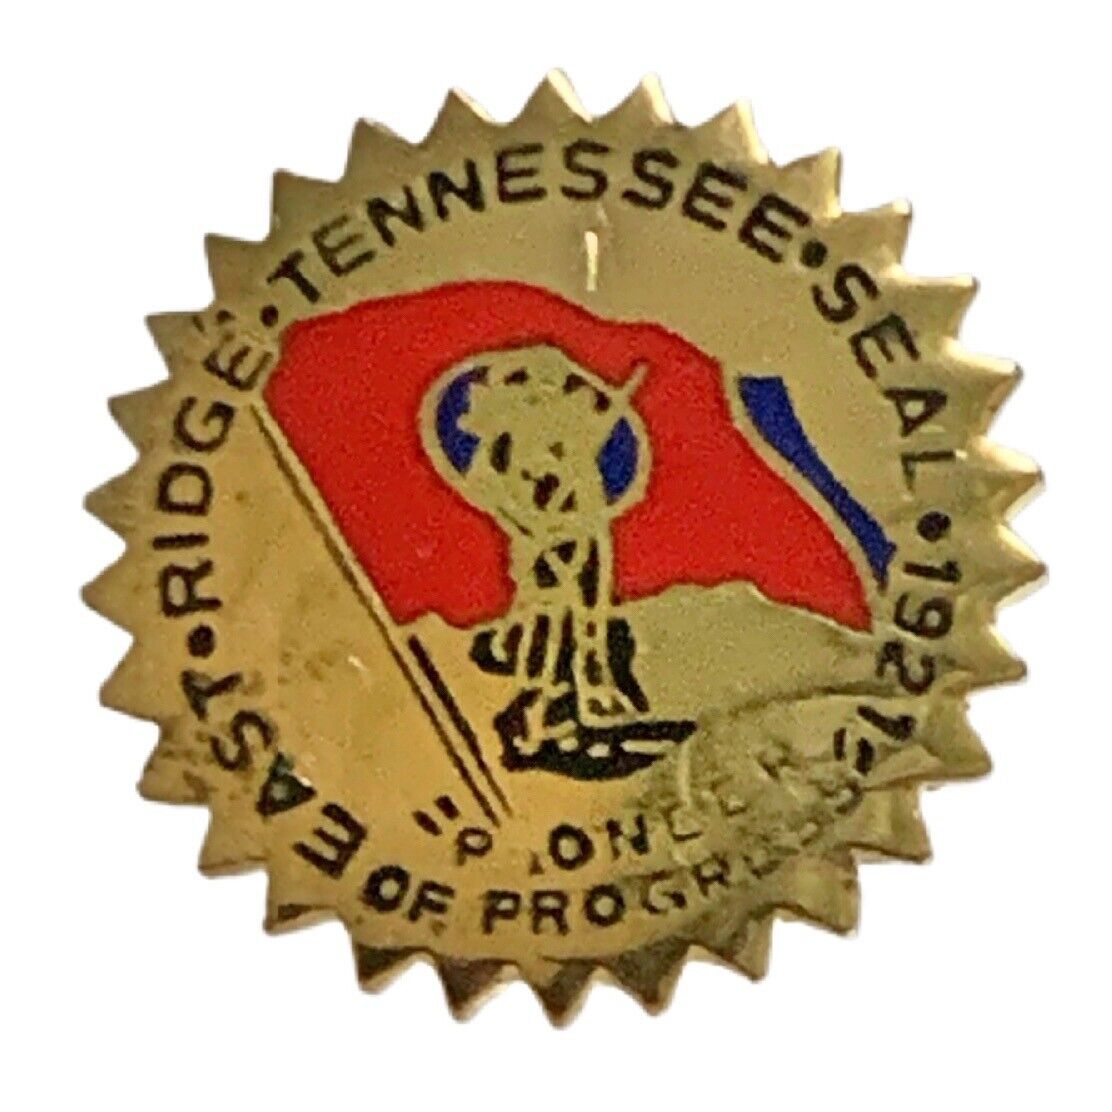 Vintage East Ridge Tennessee Seal 1921 Pioneer of Progress Travel Souvenir Pin